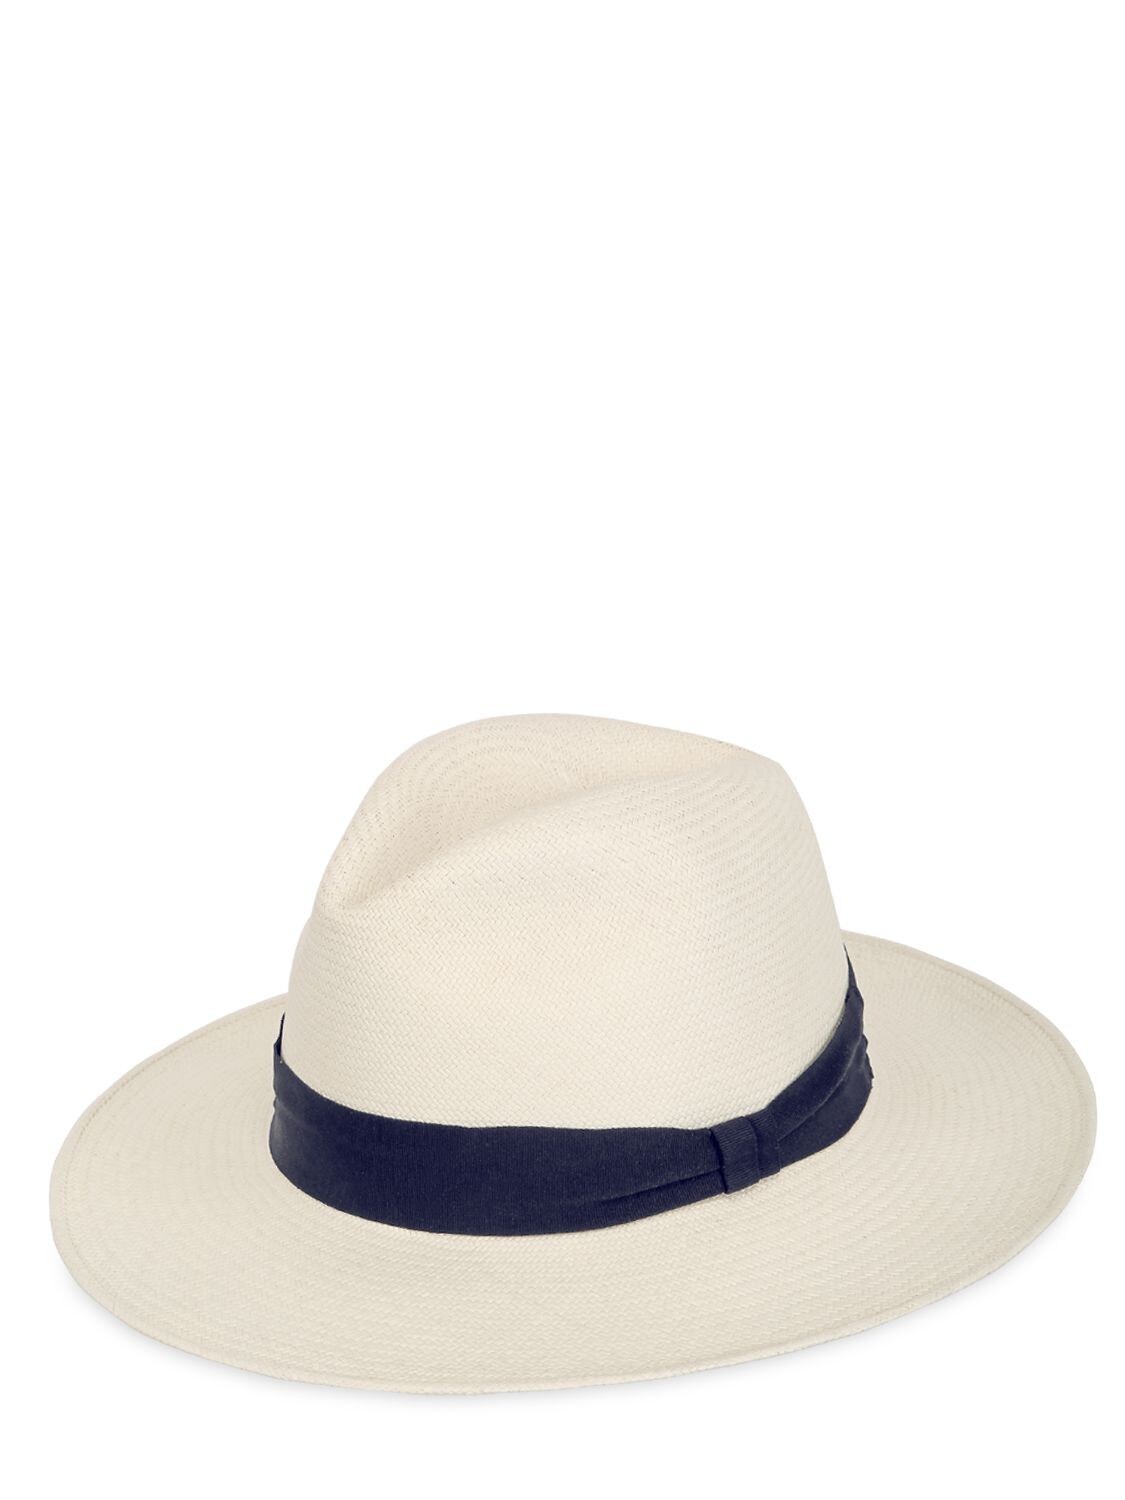 Image of Ecuadorian Panama Straw Hat